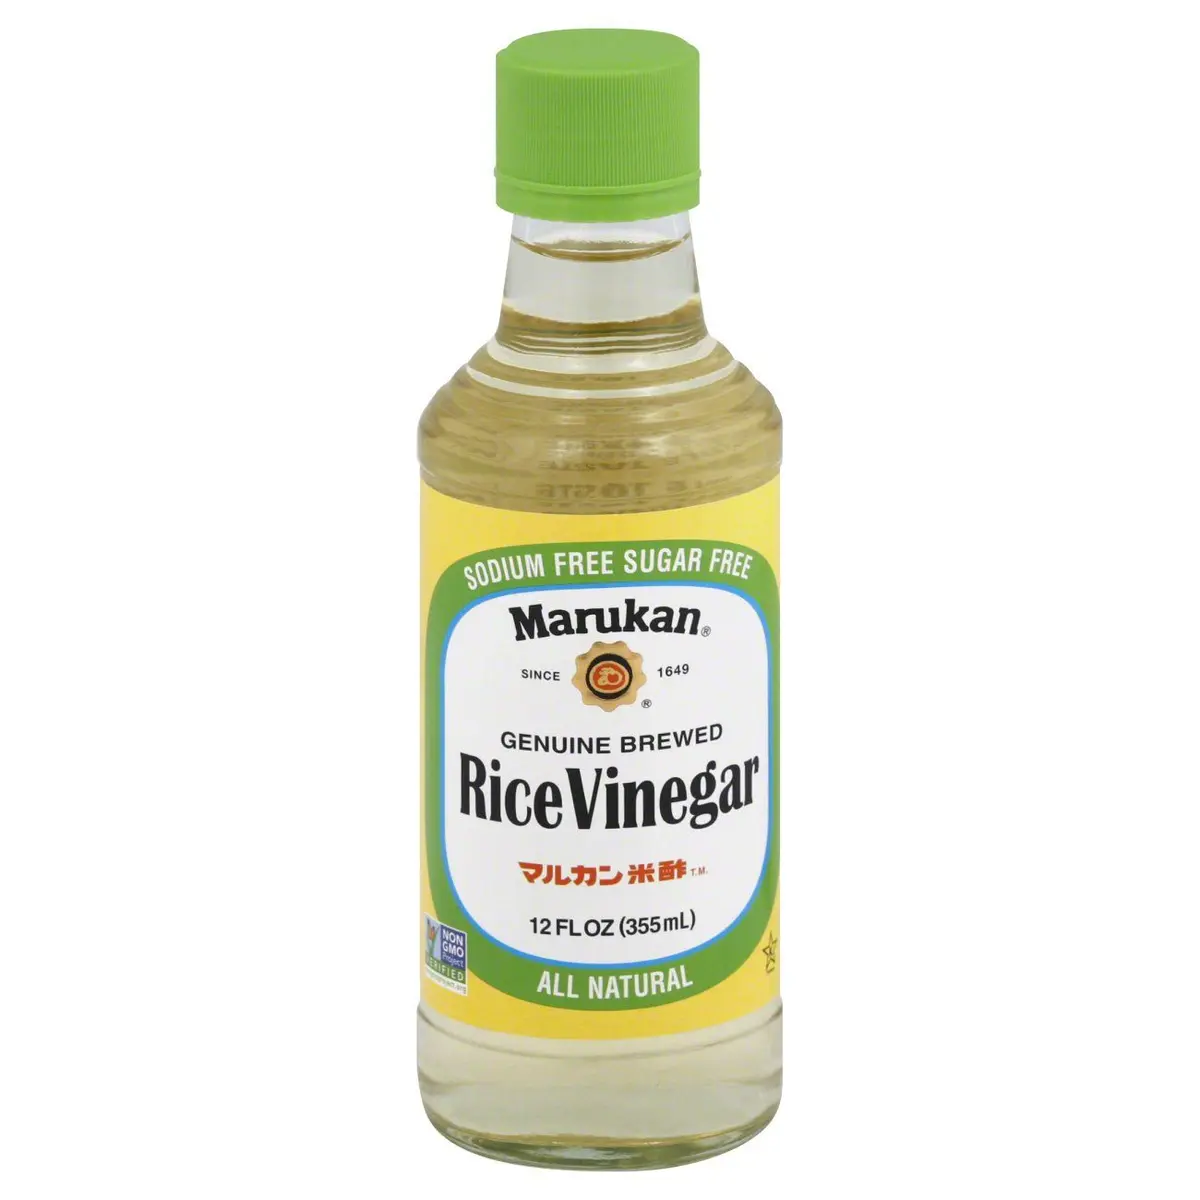 Unseasoned Rice Vinegar Substitutes for ACV